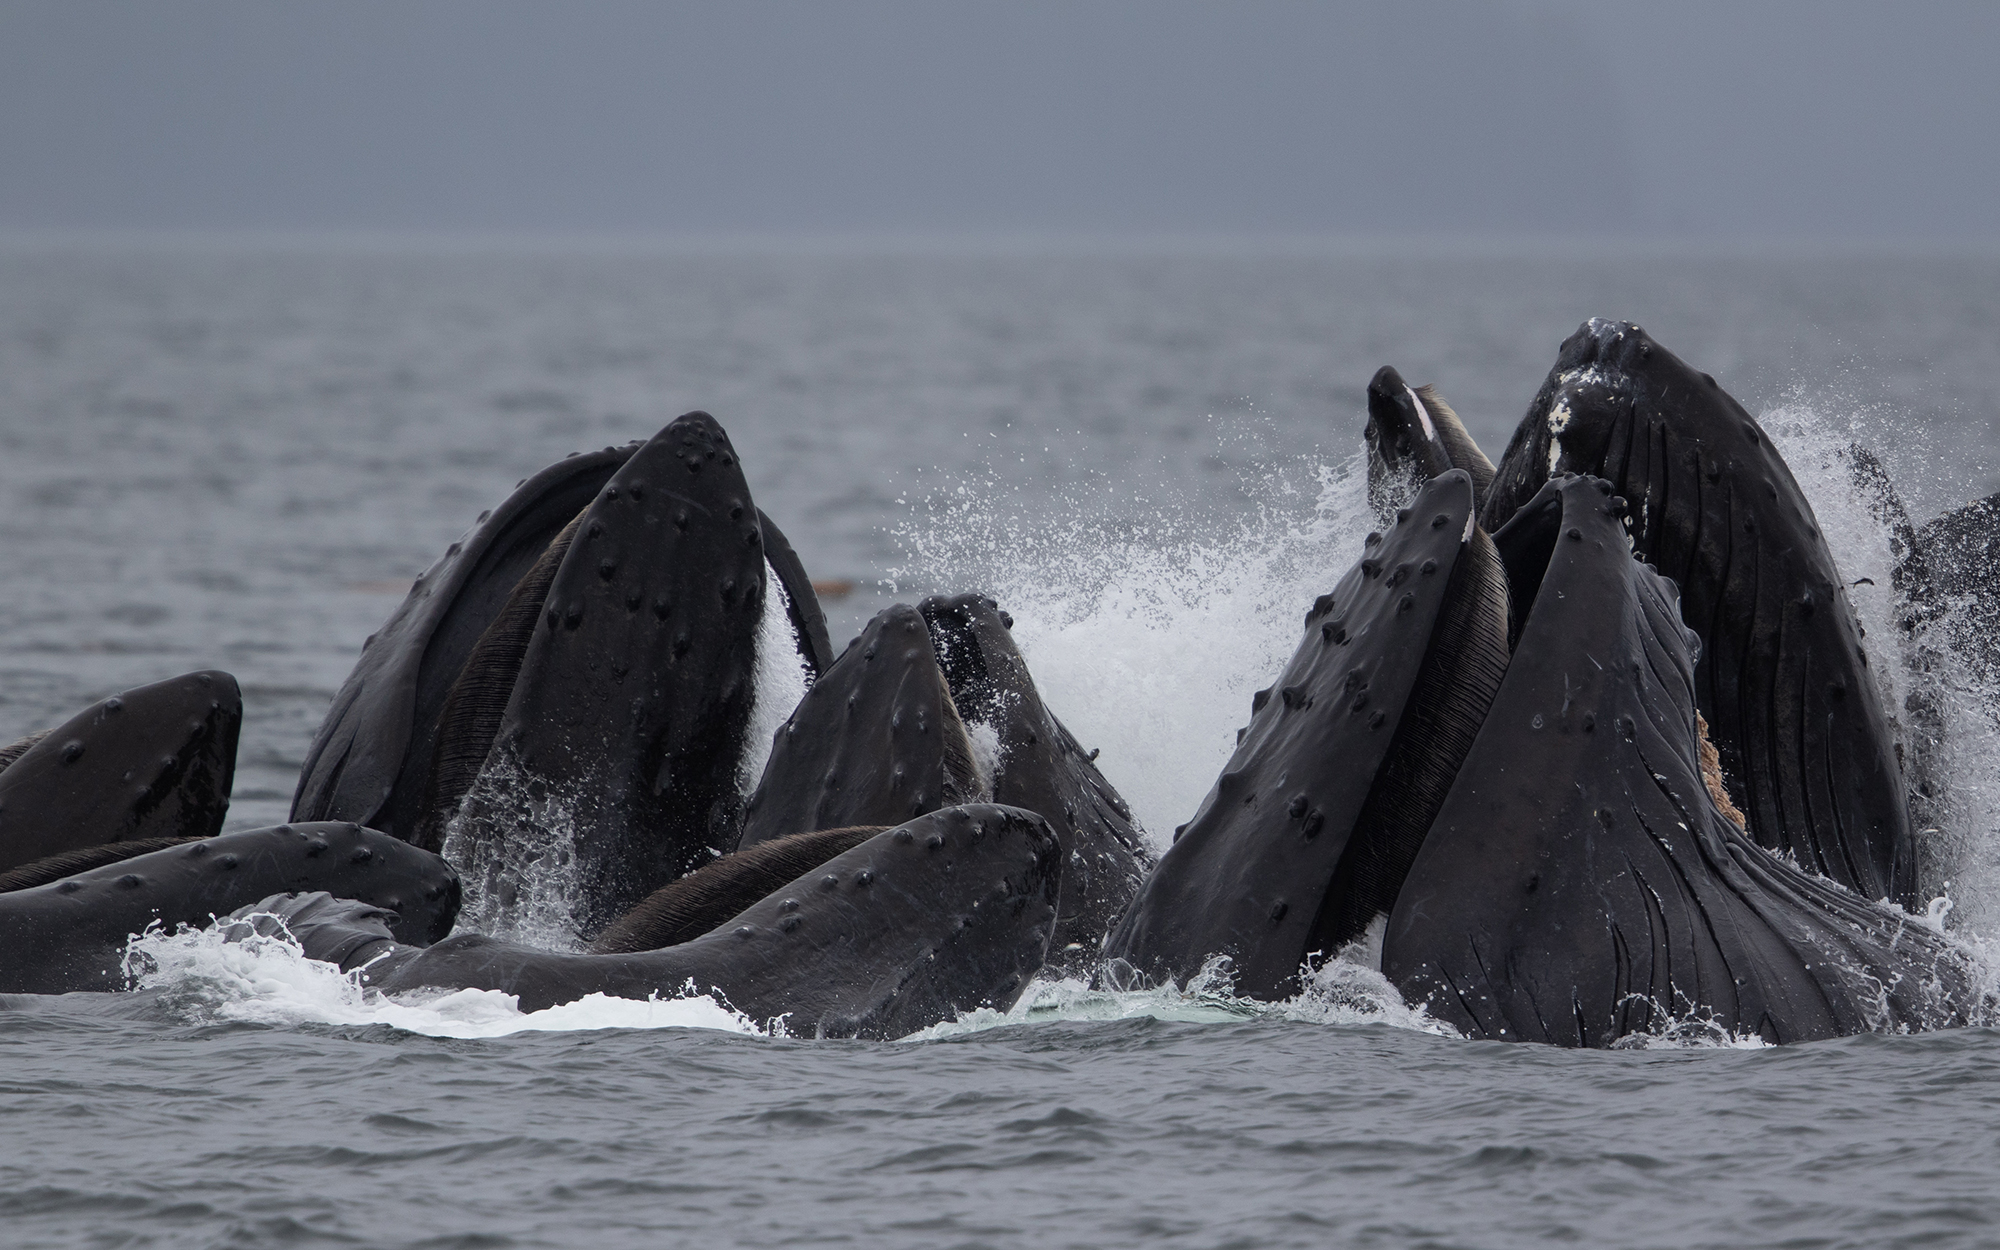 Humpback whales in Alaska fishing for herring